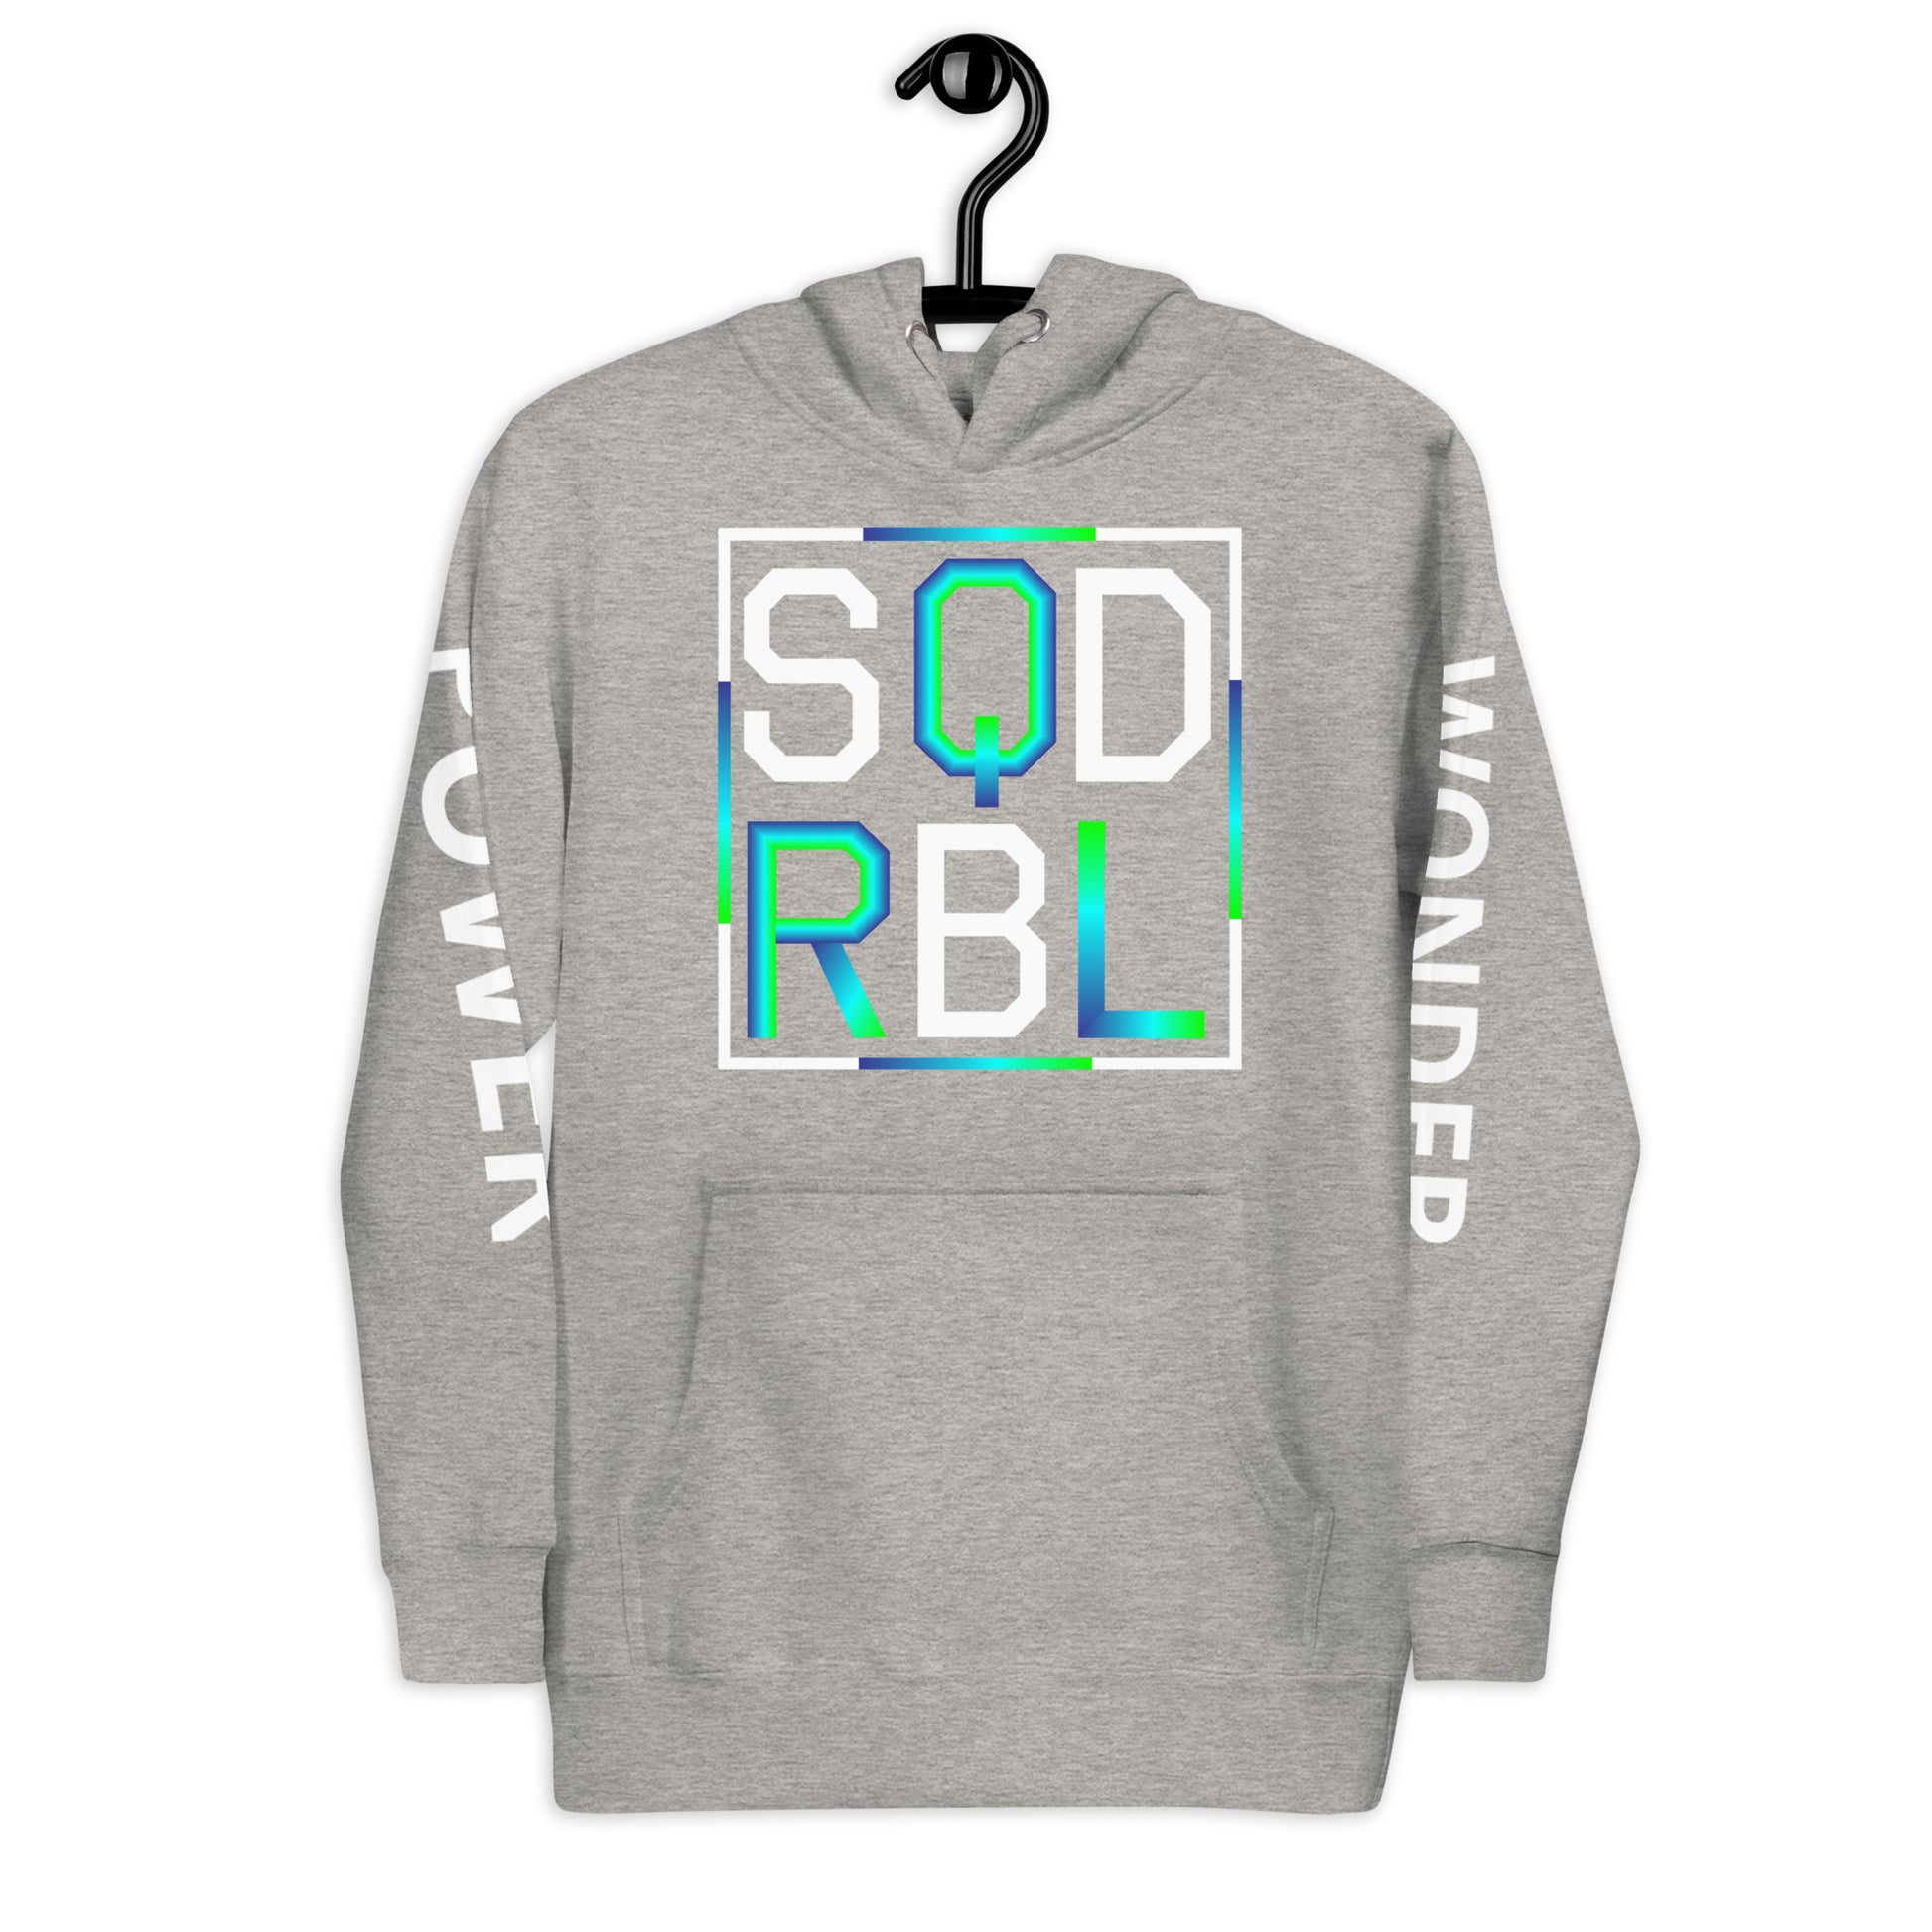 Hoodie Squad Rebel - SquadRebel7 Store